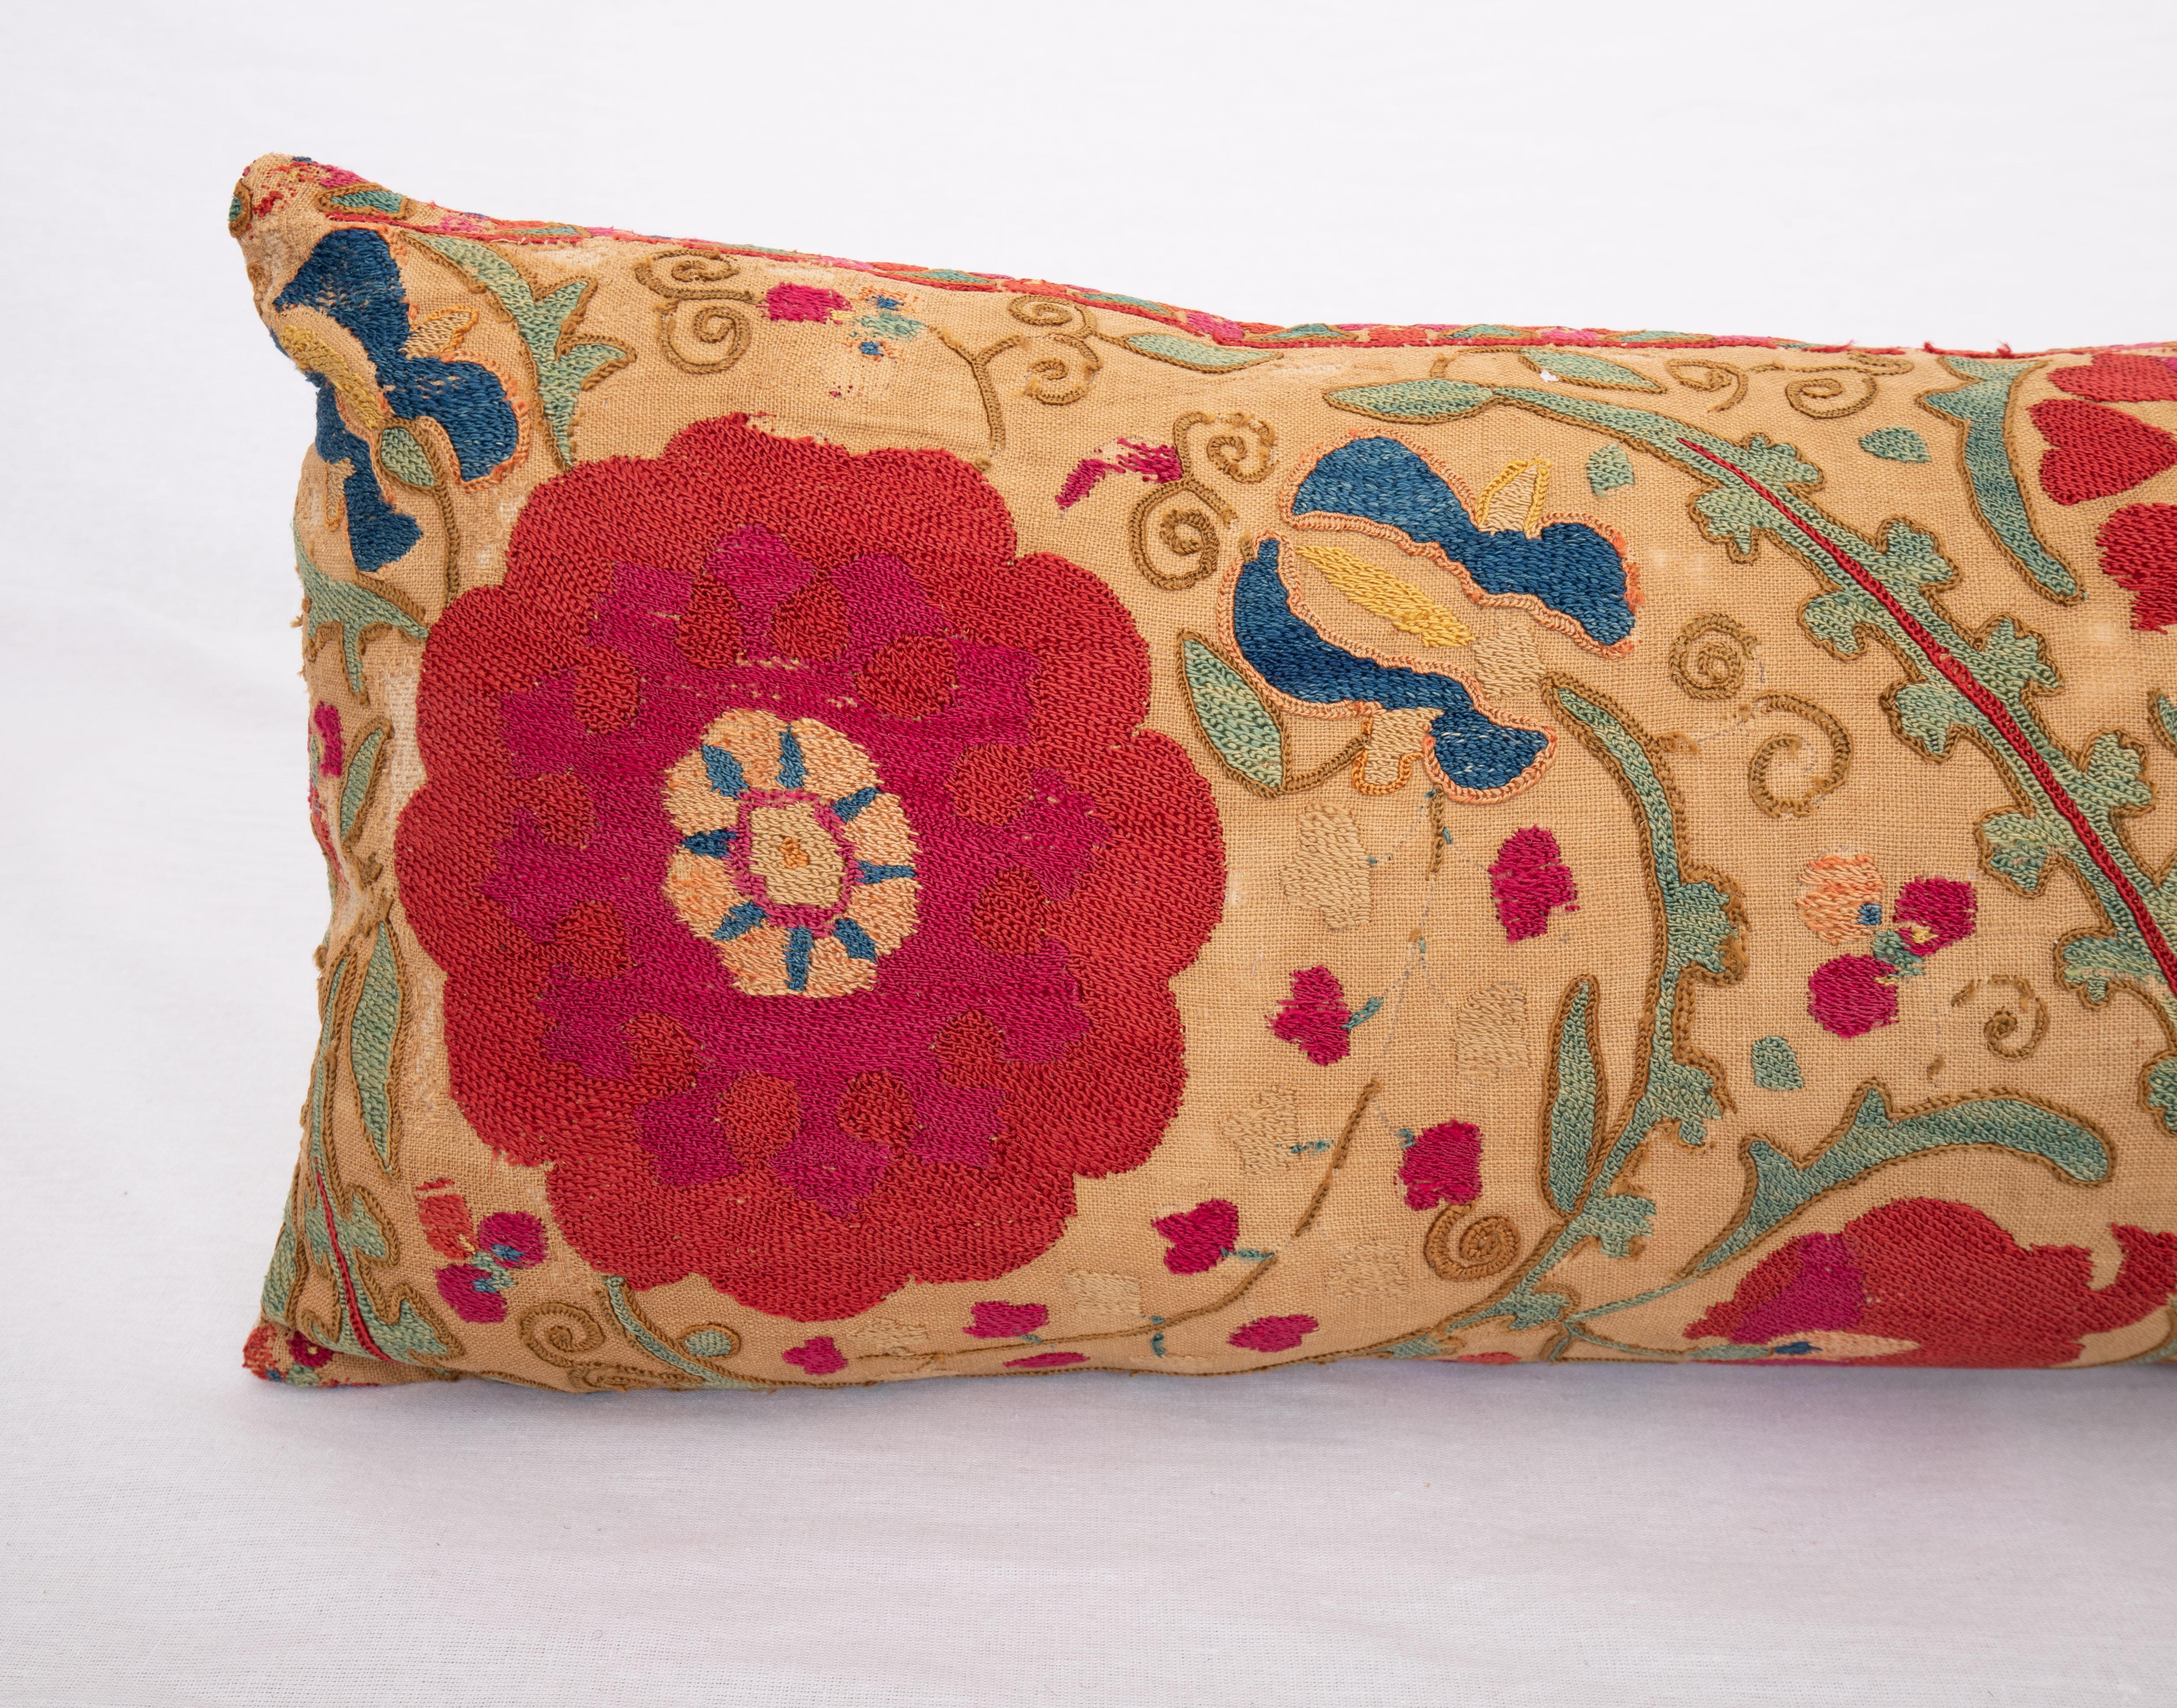 Uzbek Suzani Pillow Case Made from an Antique Suzani Fragment, 19th Century